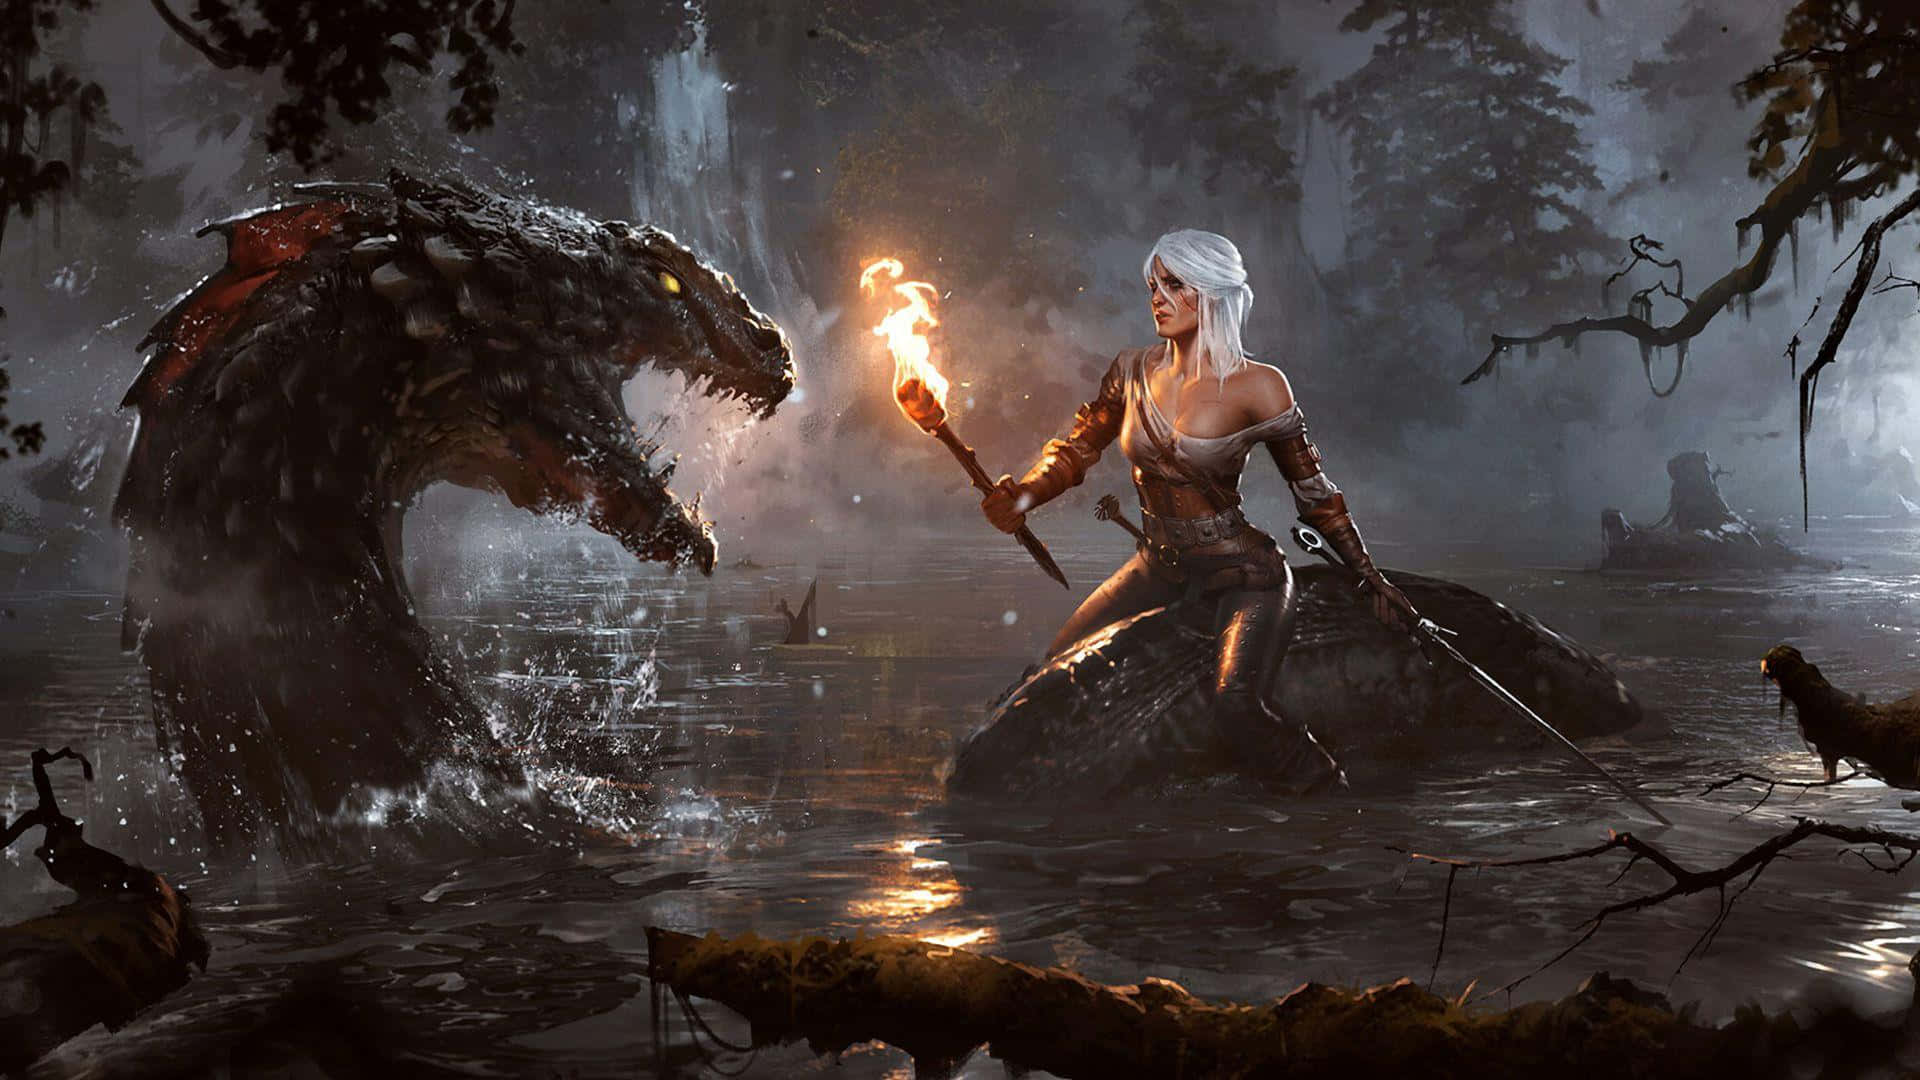 The Witcher 3 Wild Hunt Ciri and Drogon Digital Art Wallpaper